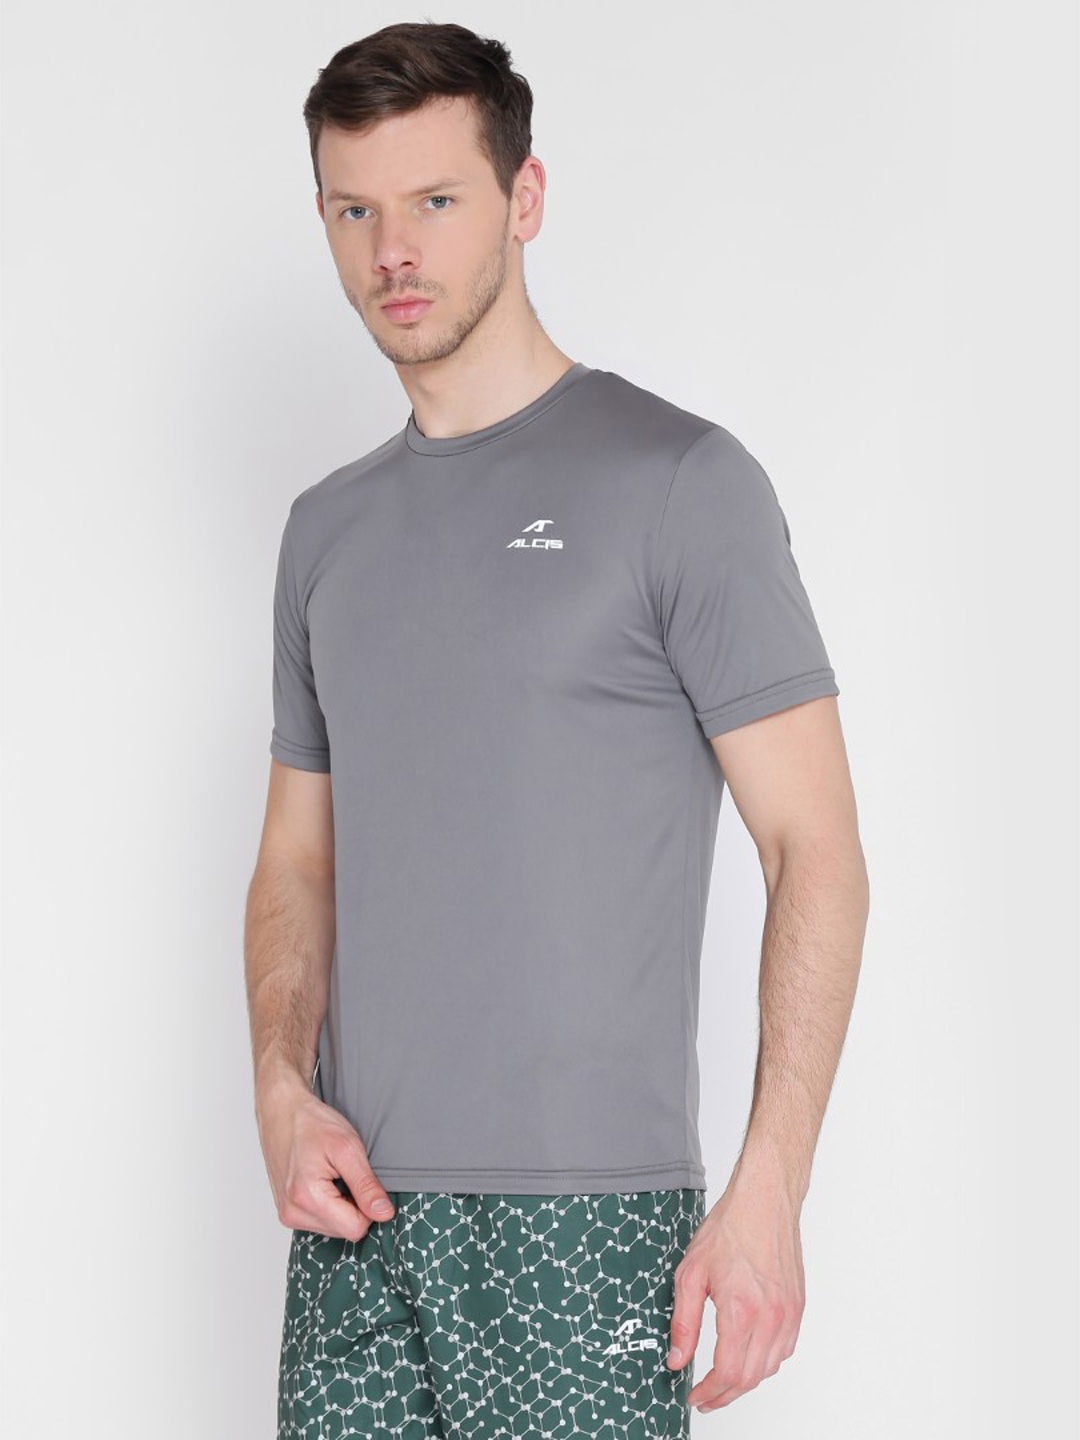 Alcis Men Charcoal Grey Solid Slim Fit Round Neck Wonder T-shirt